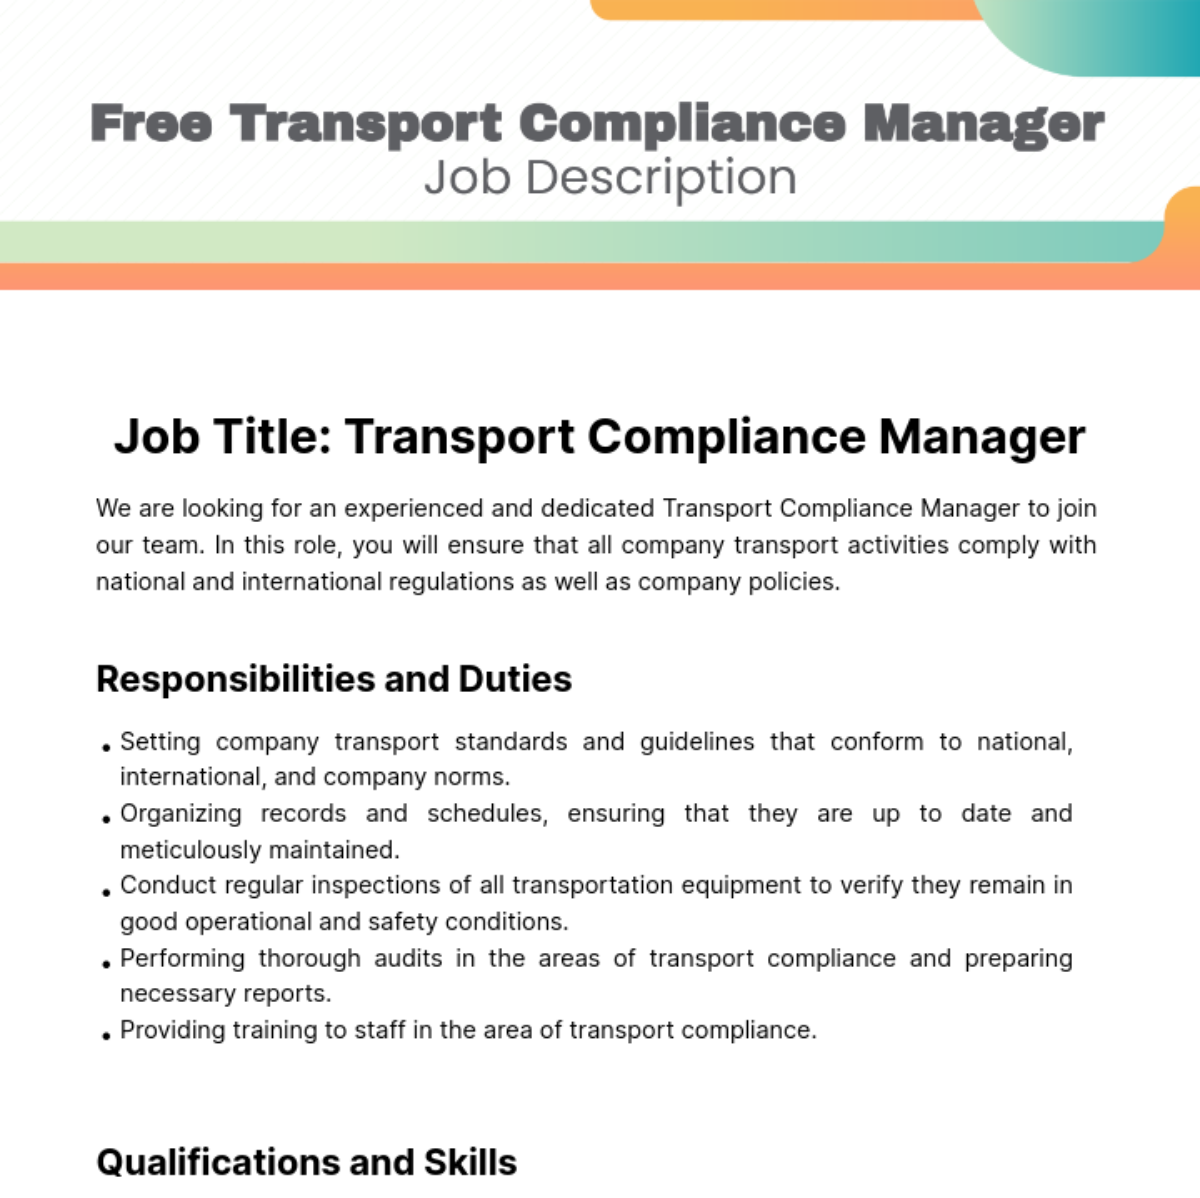 Free Transport Compliance Manager Job Description Template